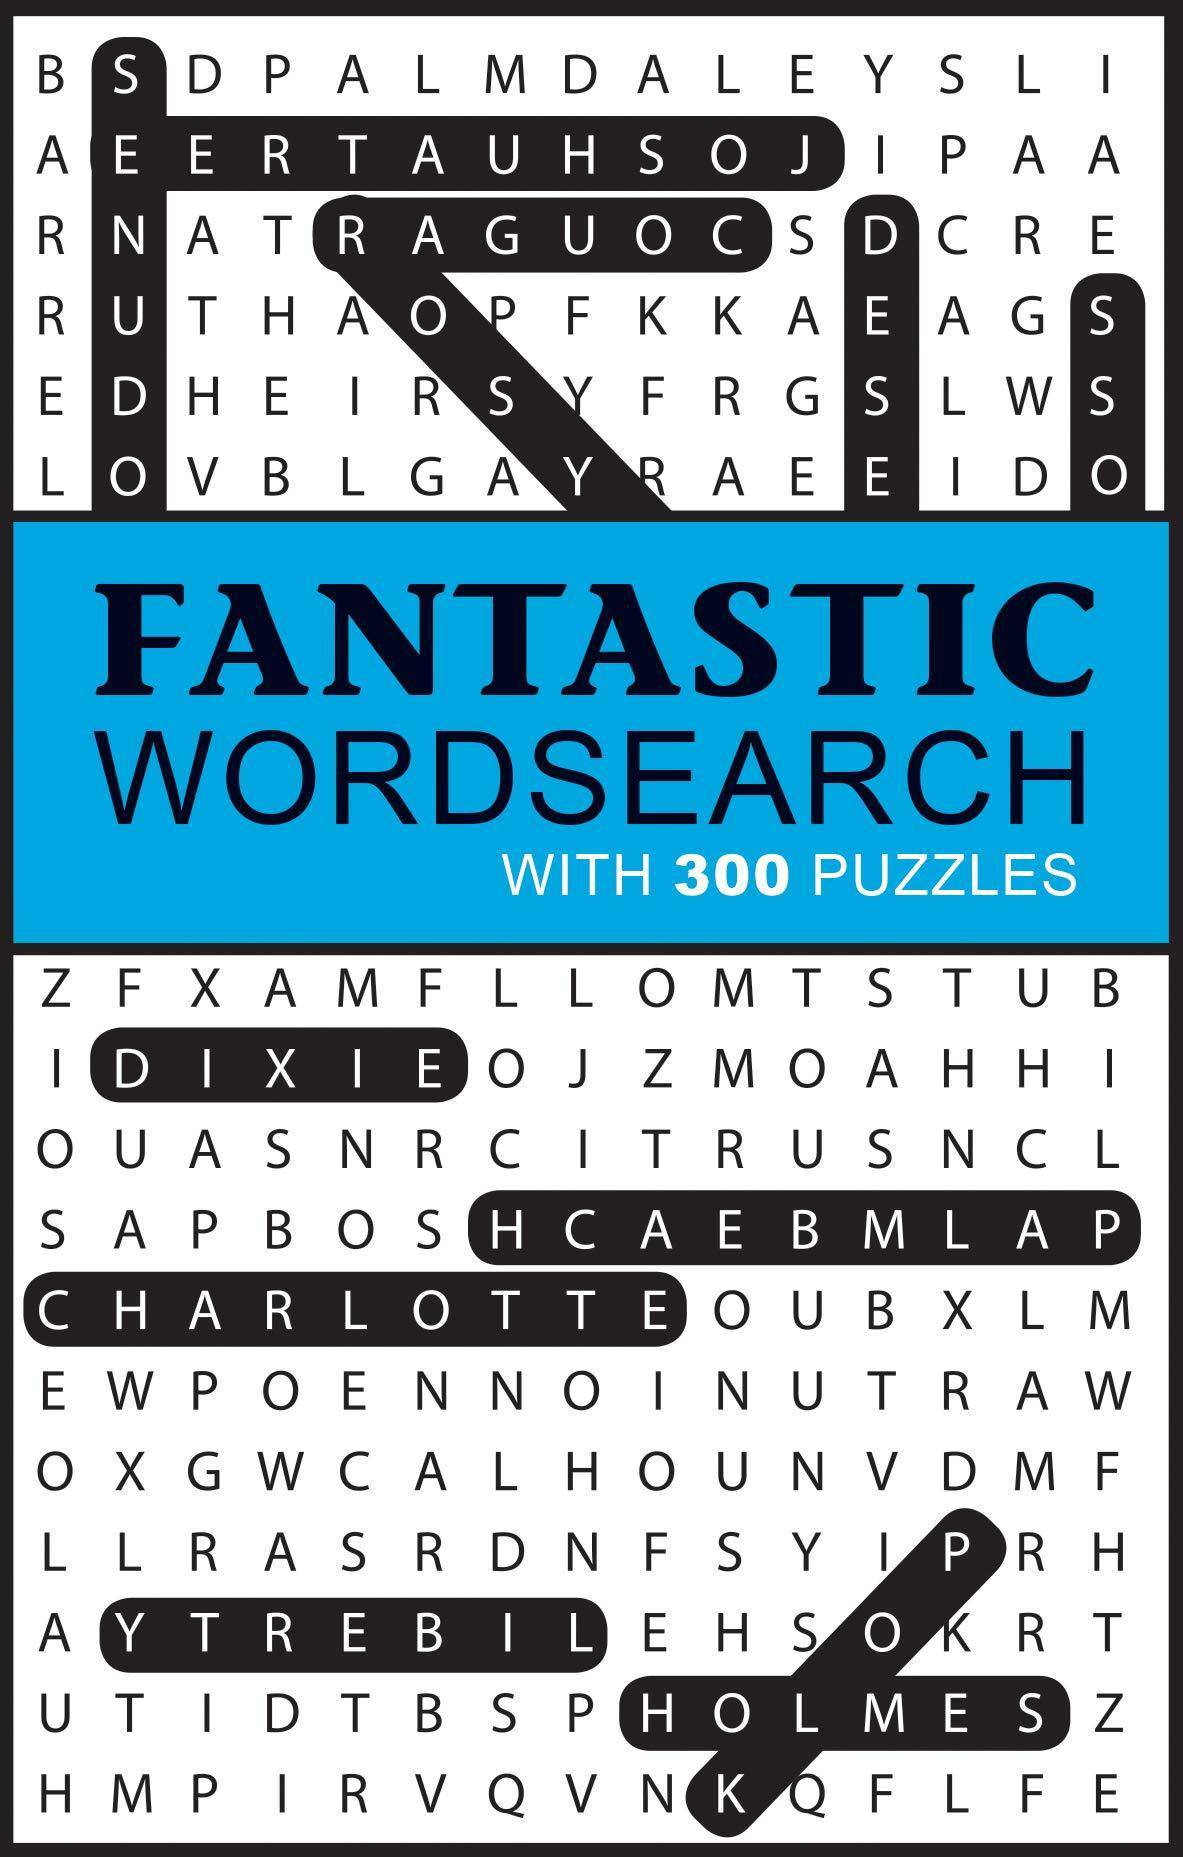 Fantastic Word Search - SureShot Books Publishing LLC